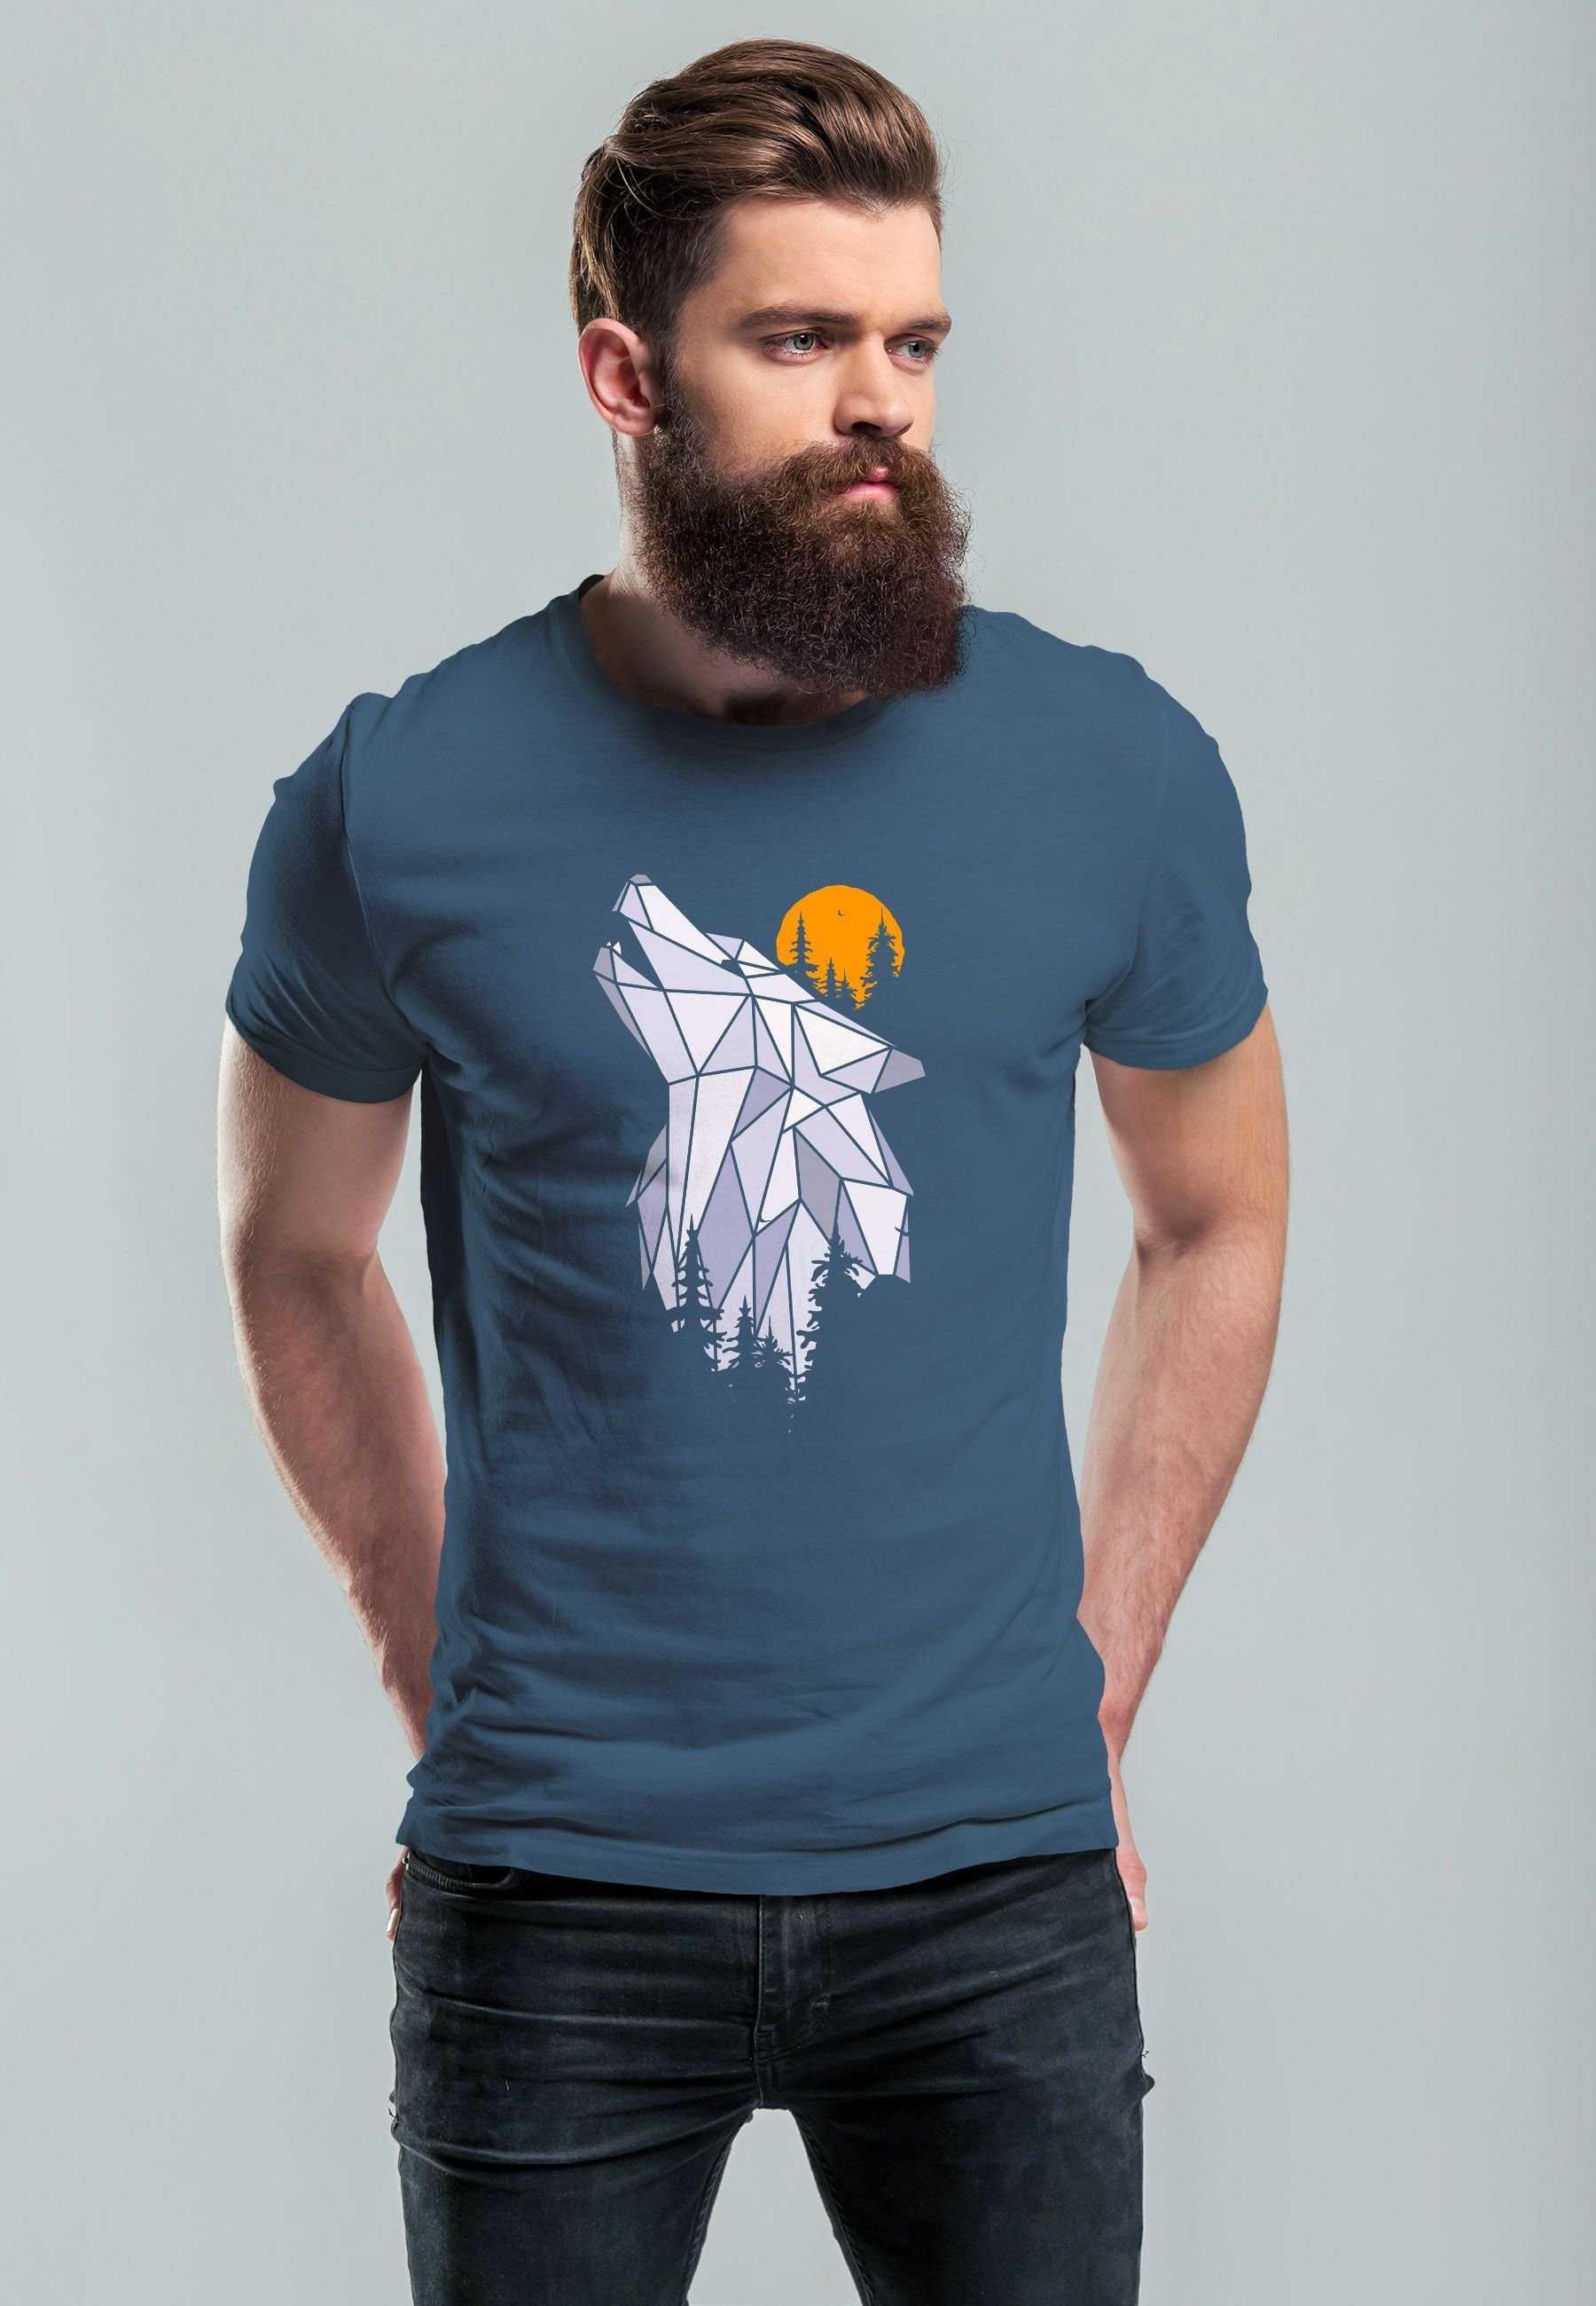 Print Tiermot blue Polygon Herren Print T-Shirt Outdoor Neverless denim Adventure Wolf Print-Shirt mit Wald Natur